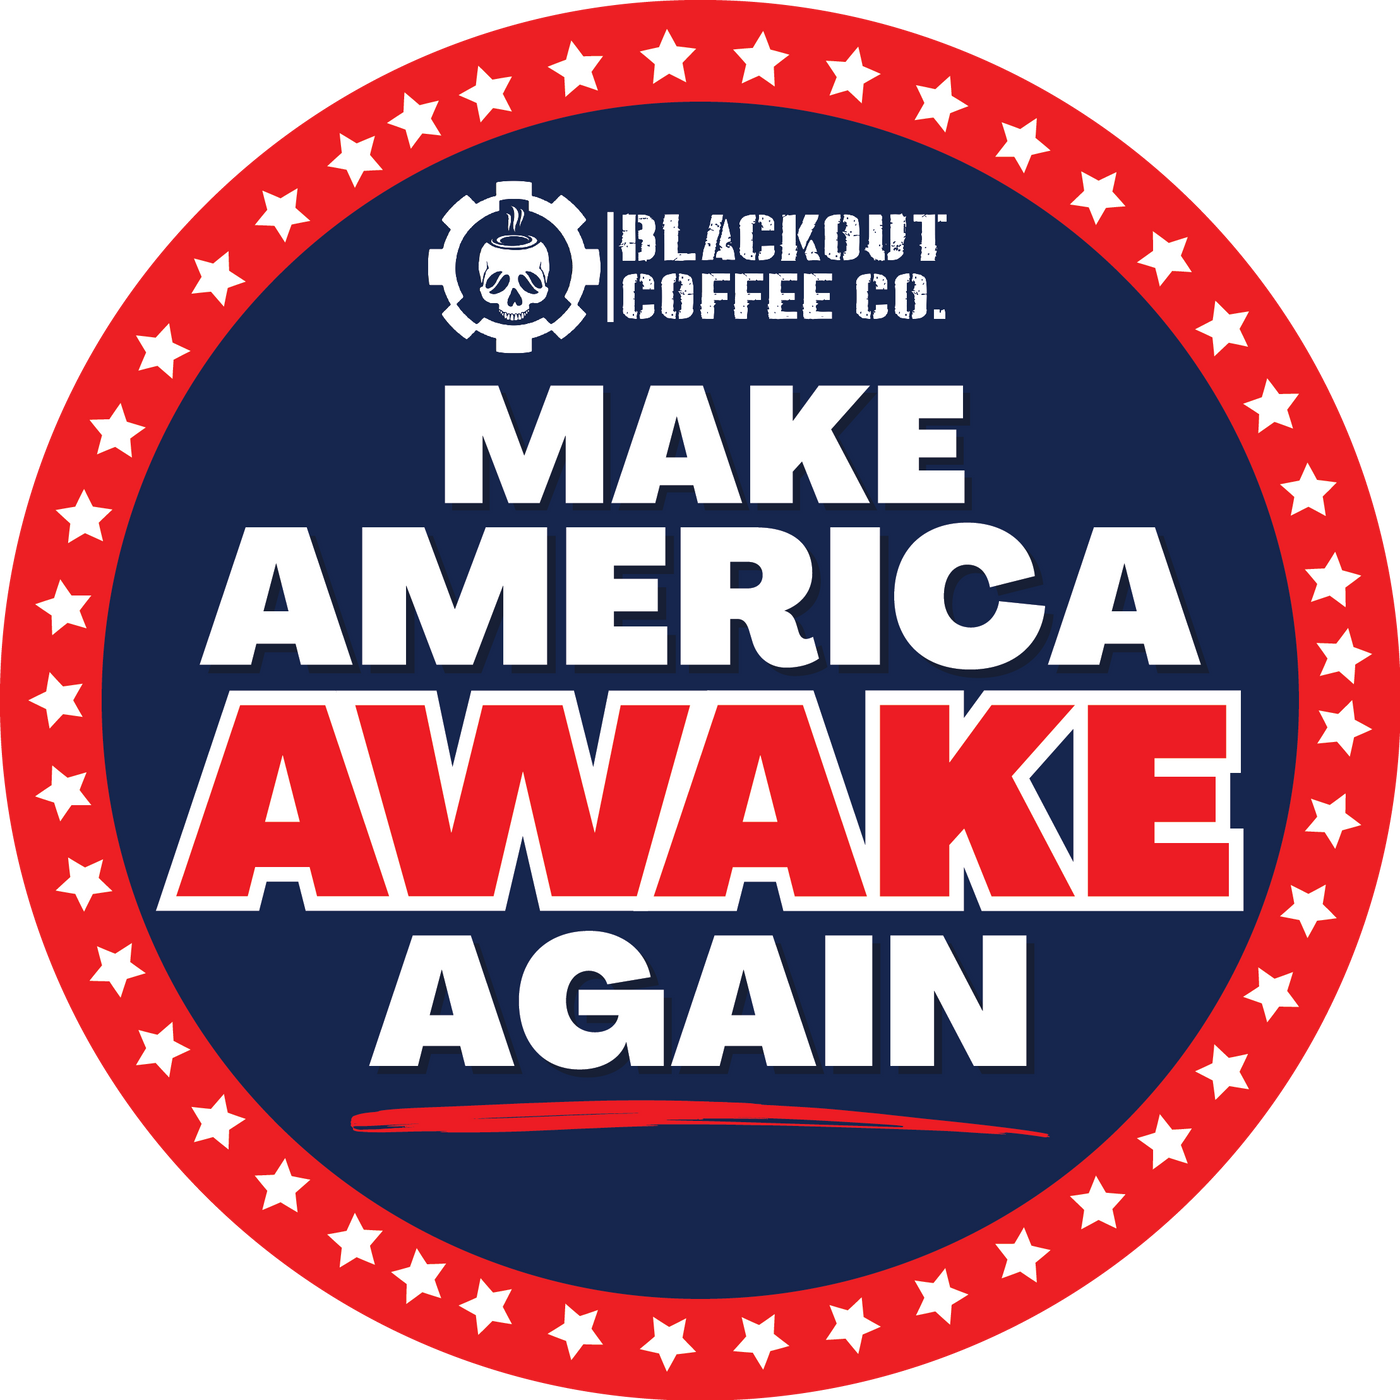 Make America Awake Again Blackout Coffee Logo Vinyl Decal